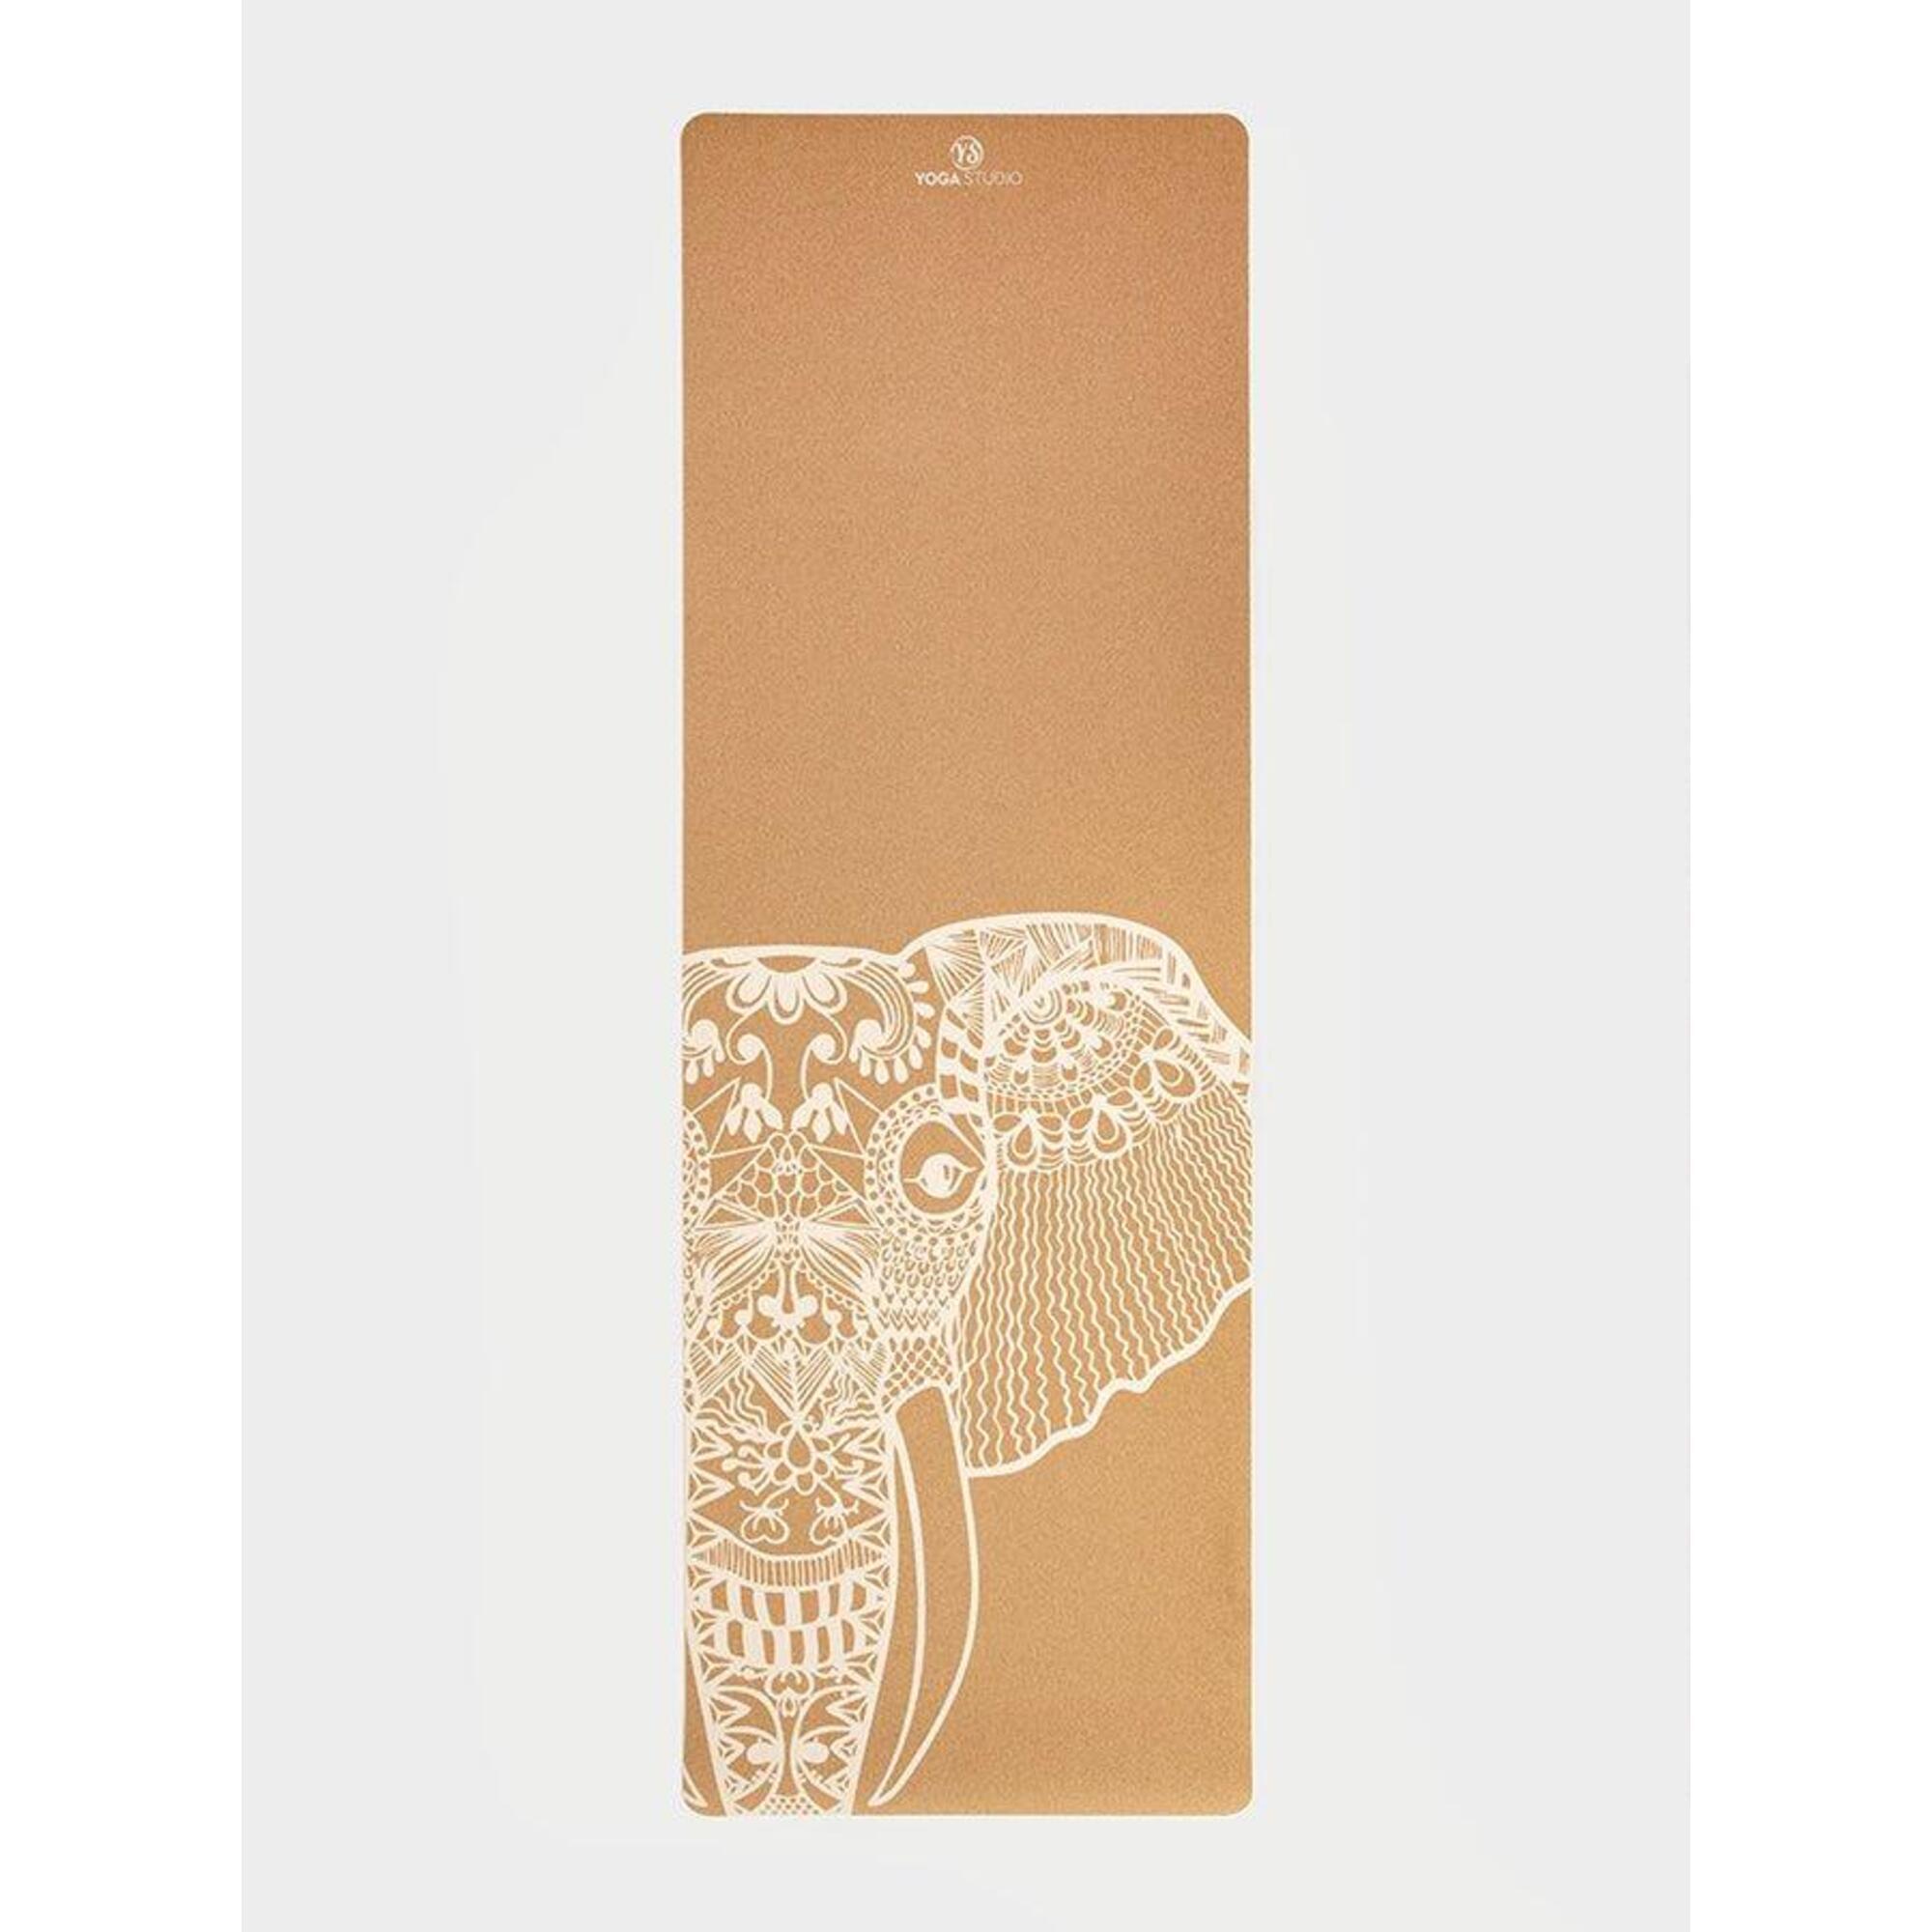 YOGA STUDIO Yoga Studio Elephant Cork Yoga Mat 4mm - White Elephant